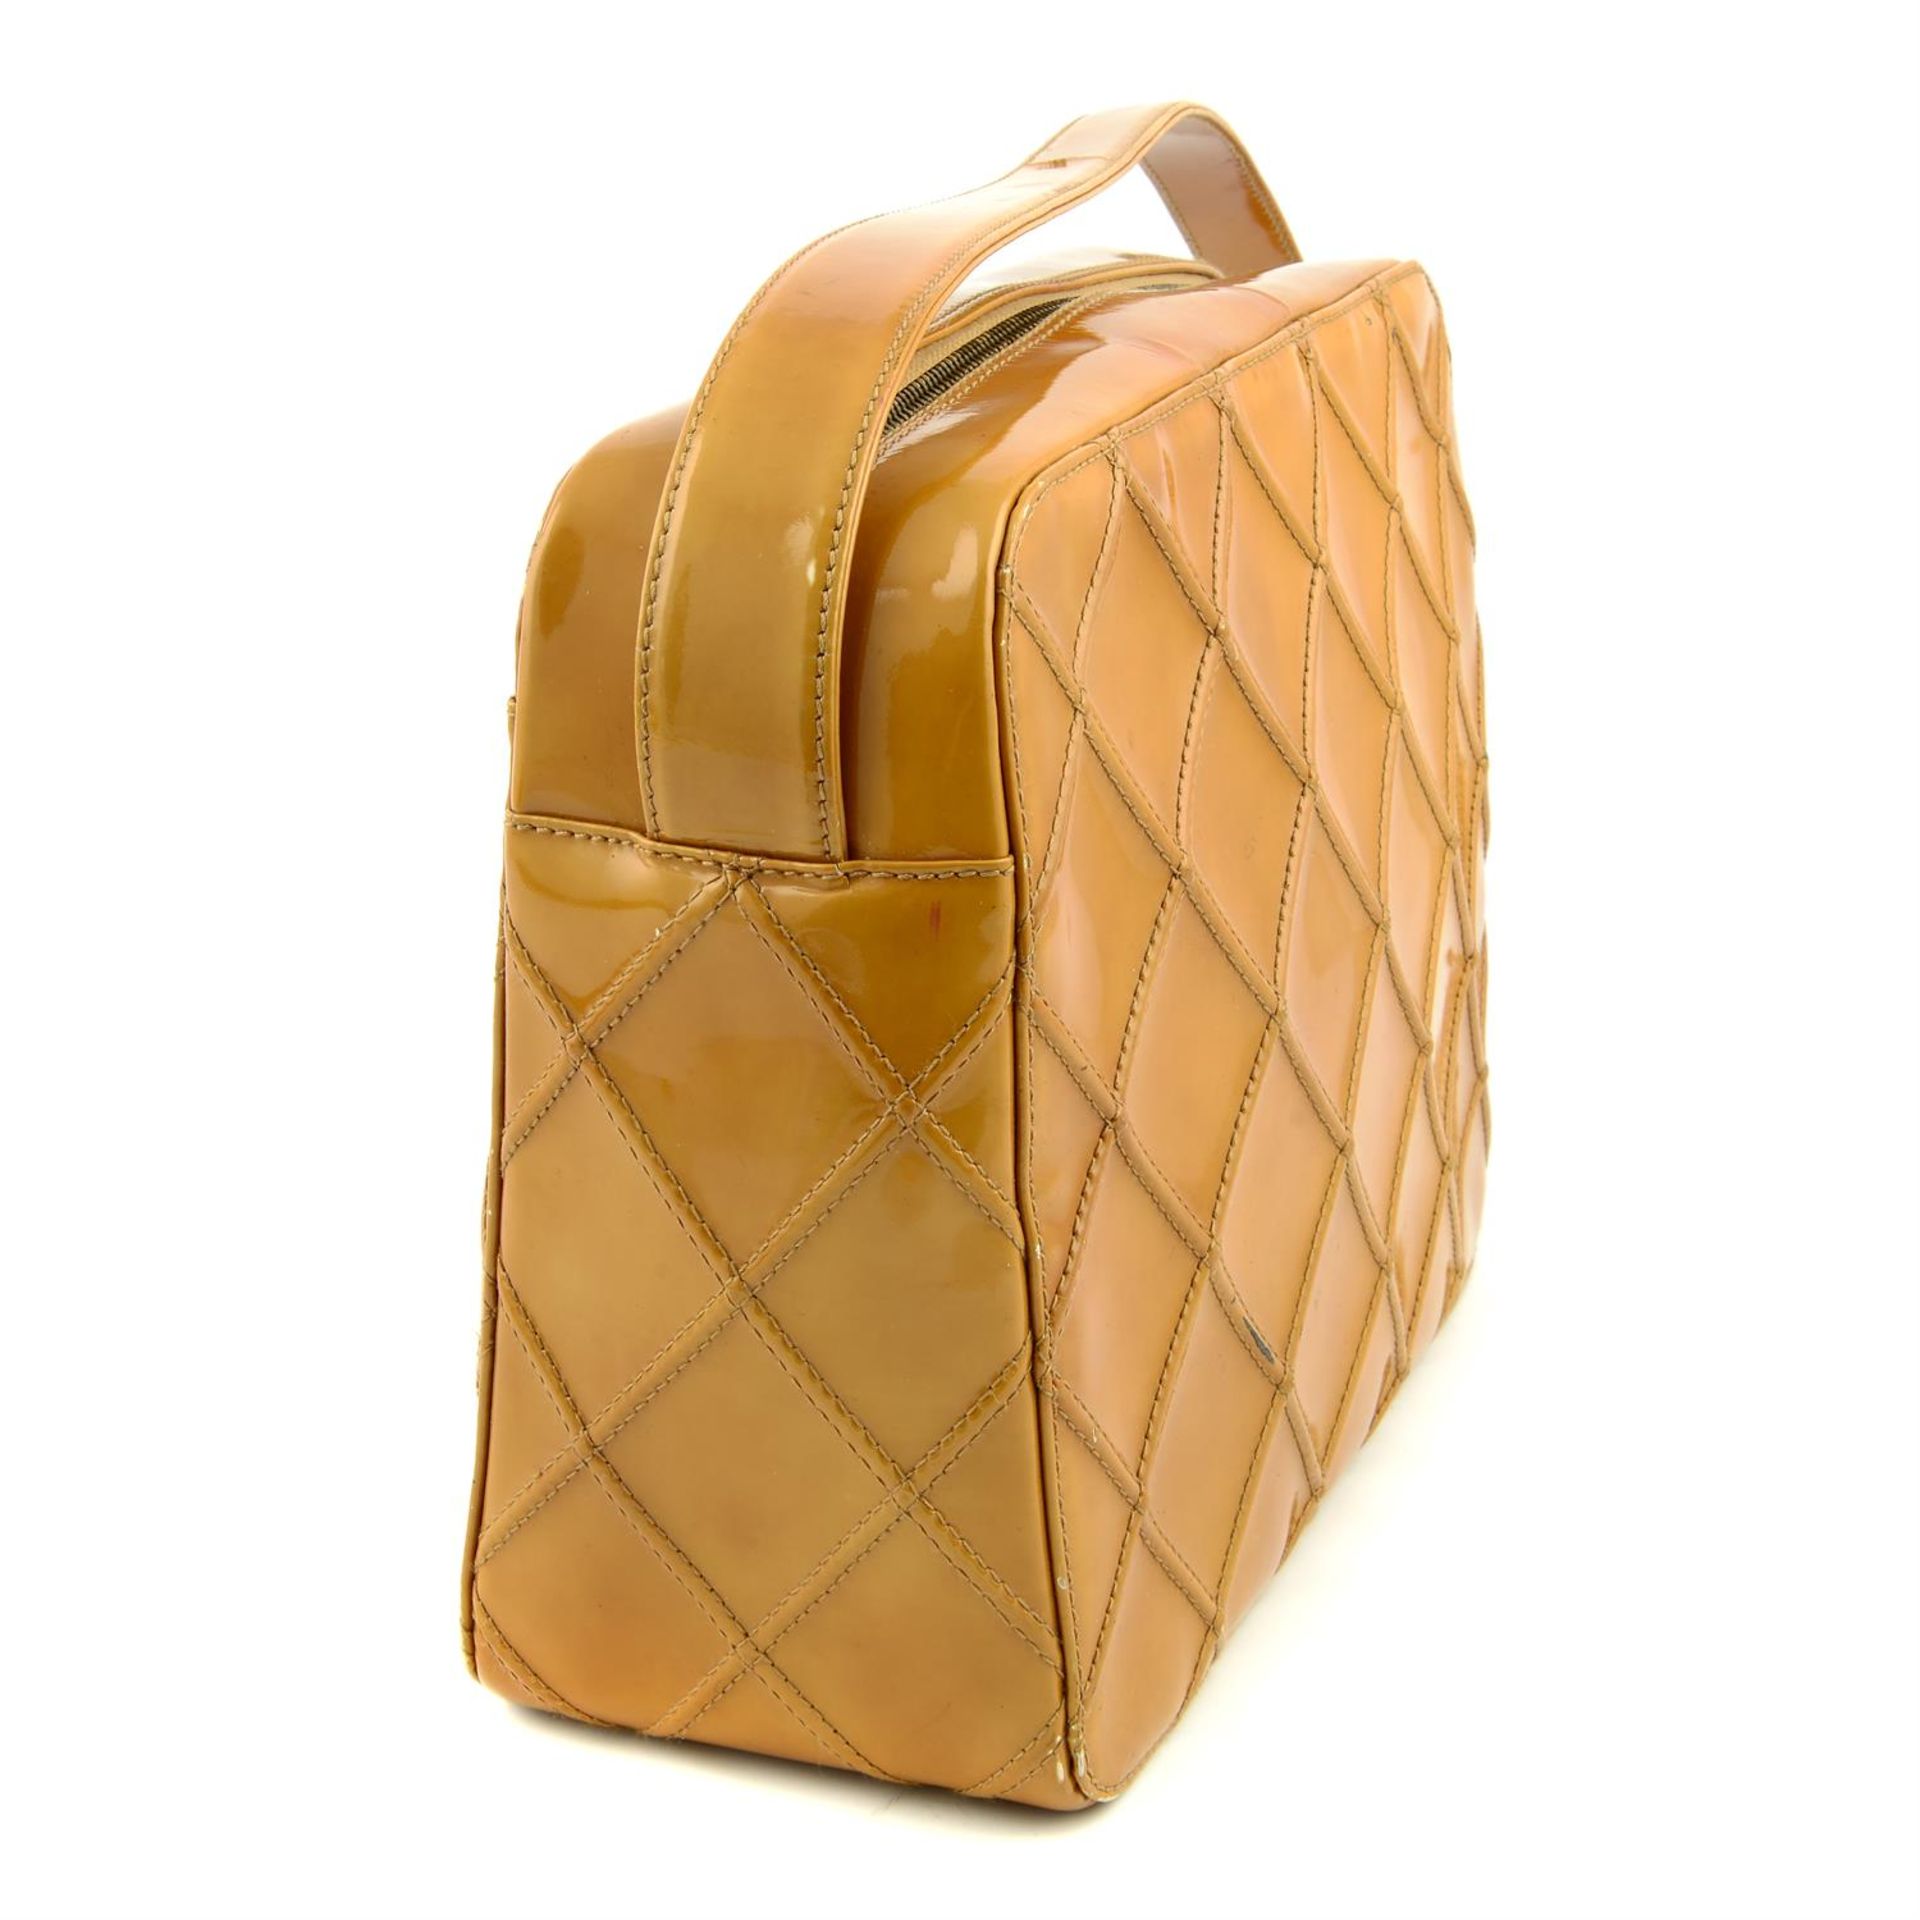 CHANEL - a 2000 orange patent leather shoulder bag. - Bild 4 aus 7